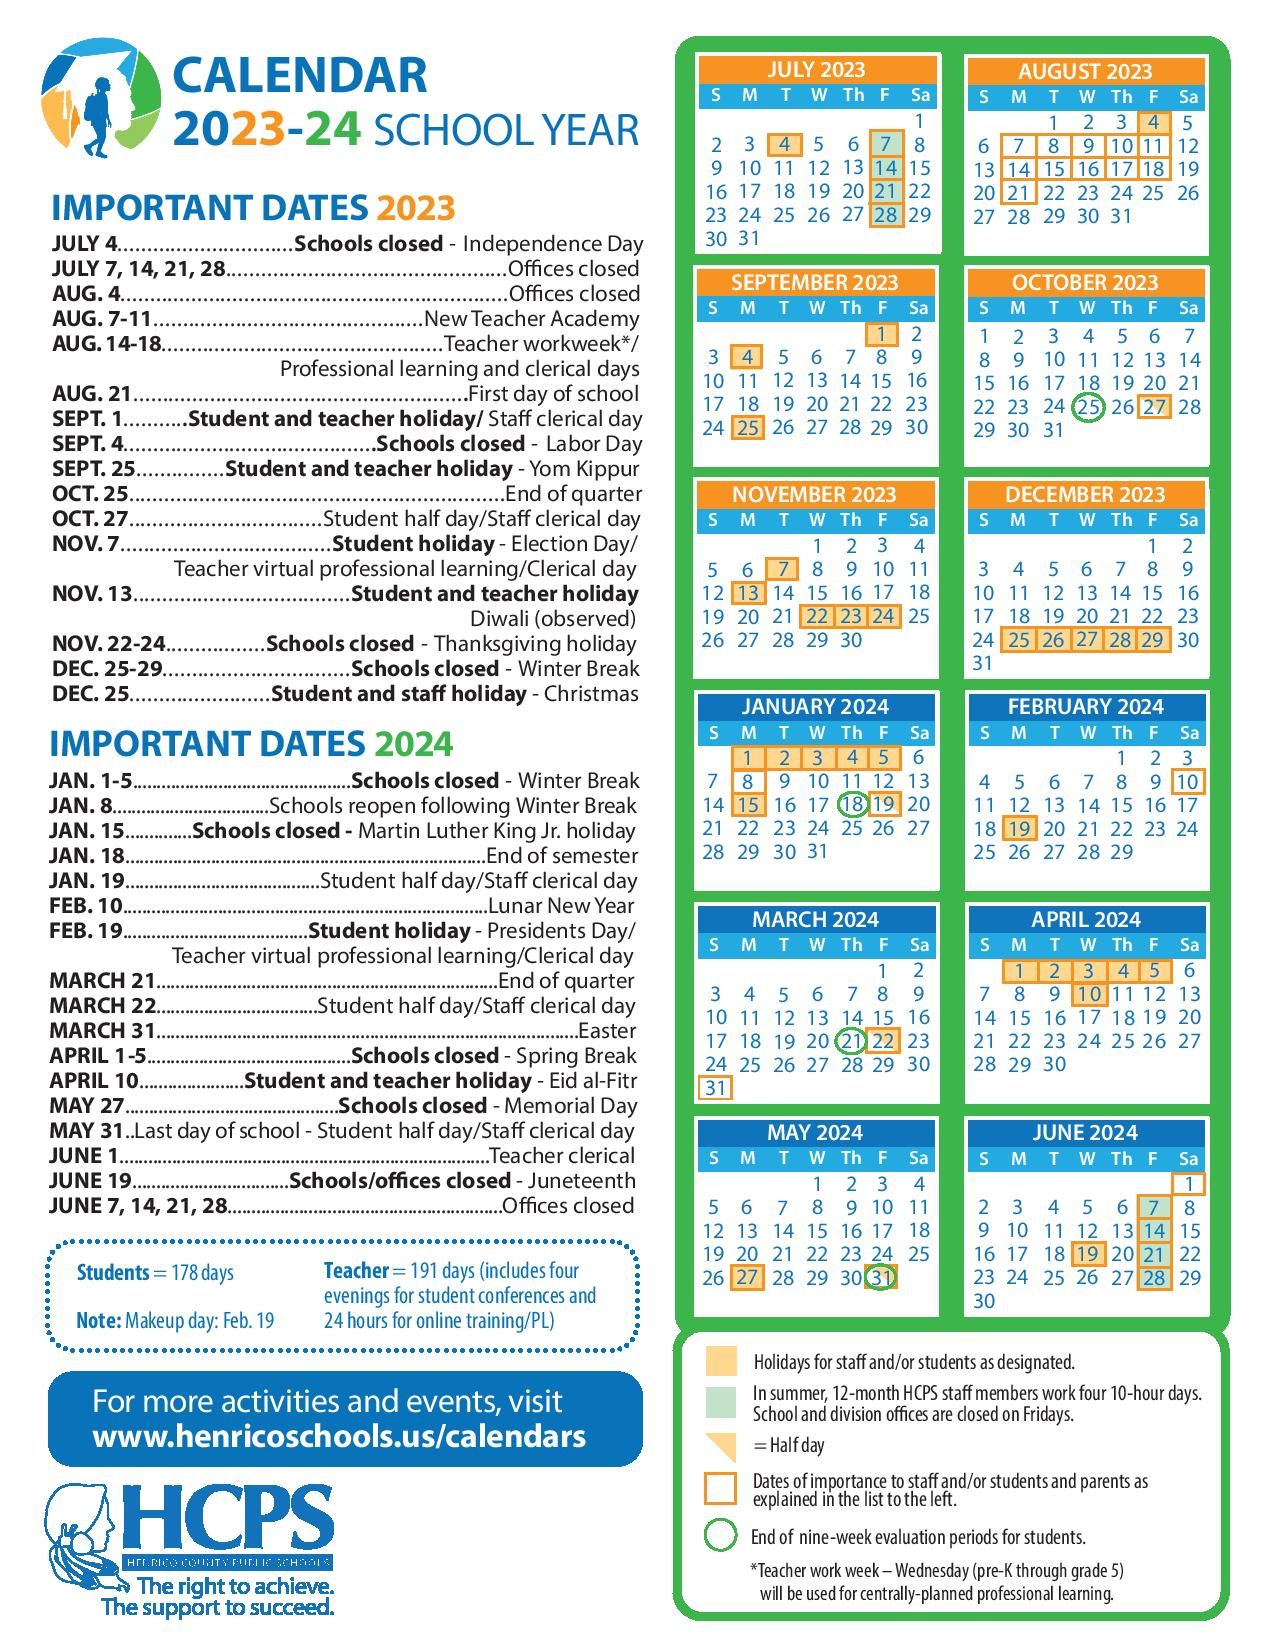 Henrico County Public Schools Calendar 2023-2024 Holidays